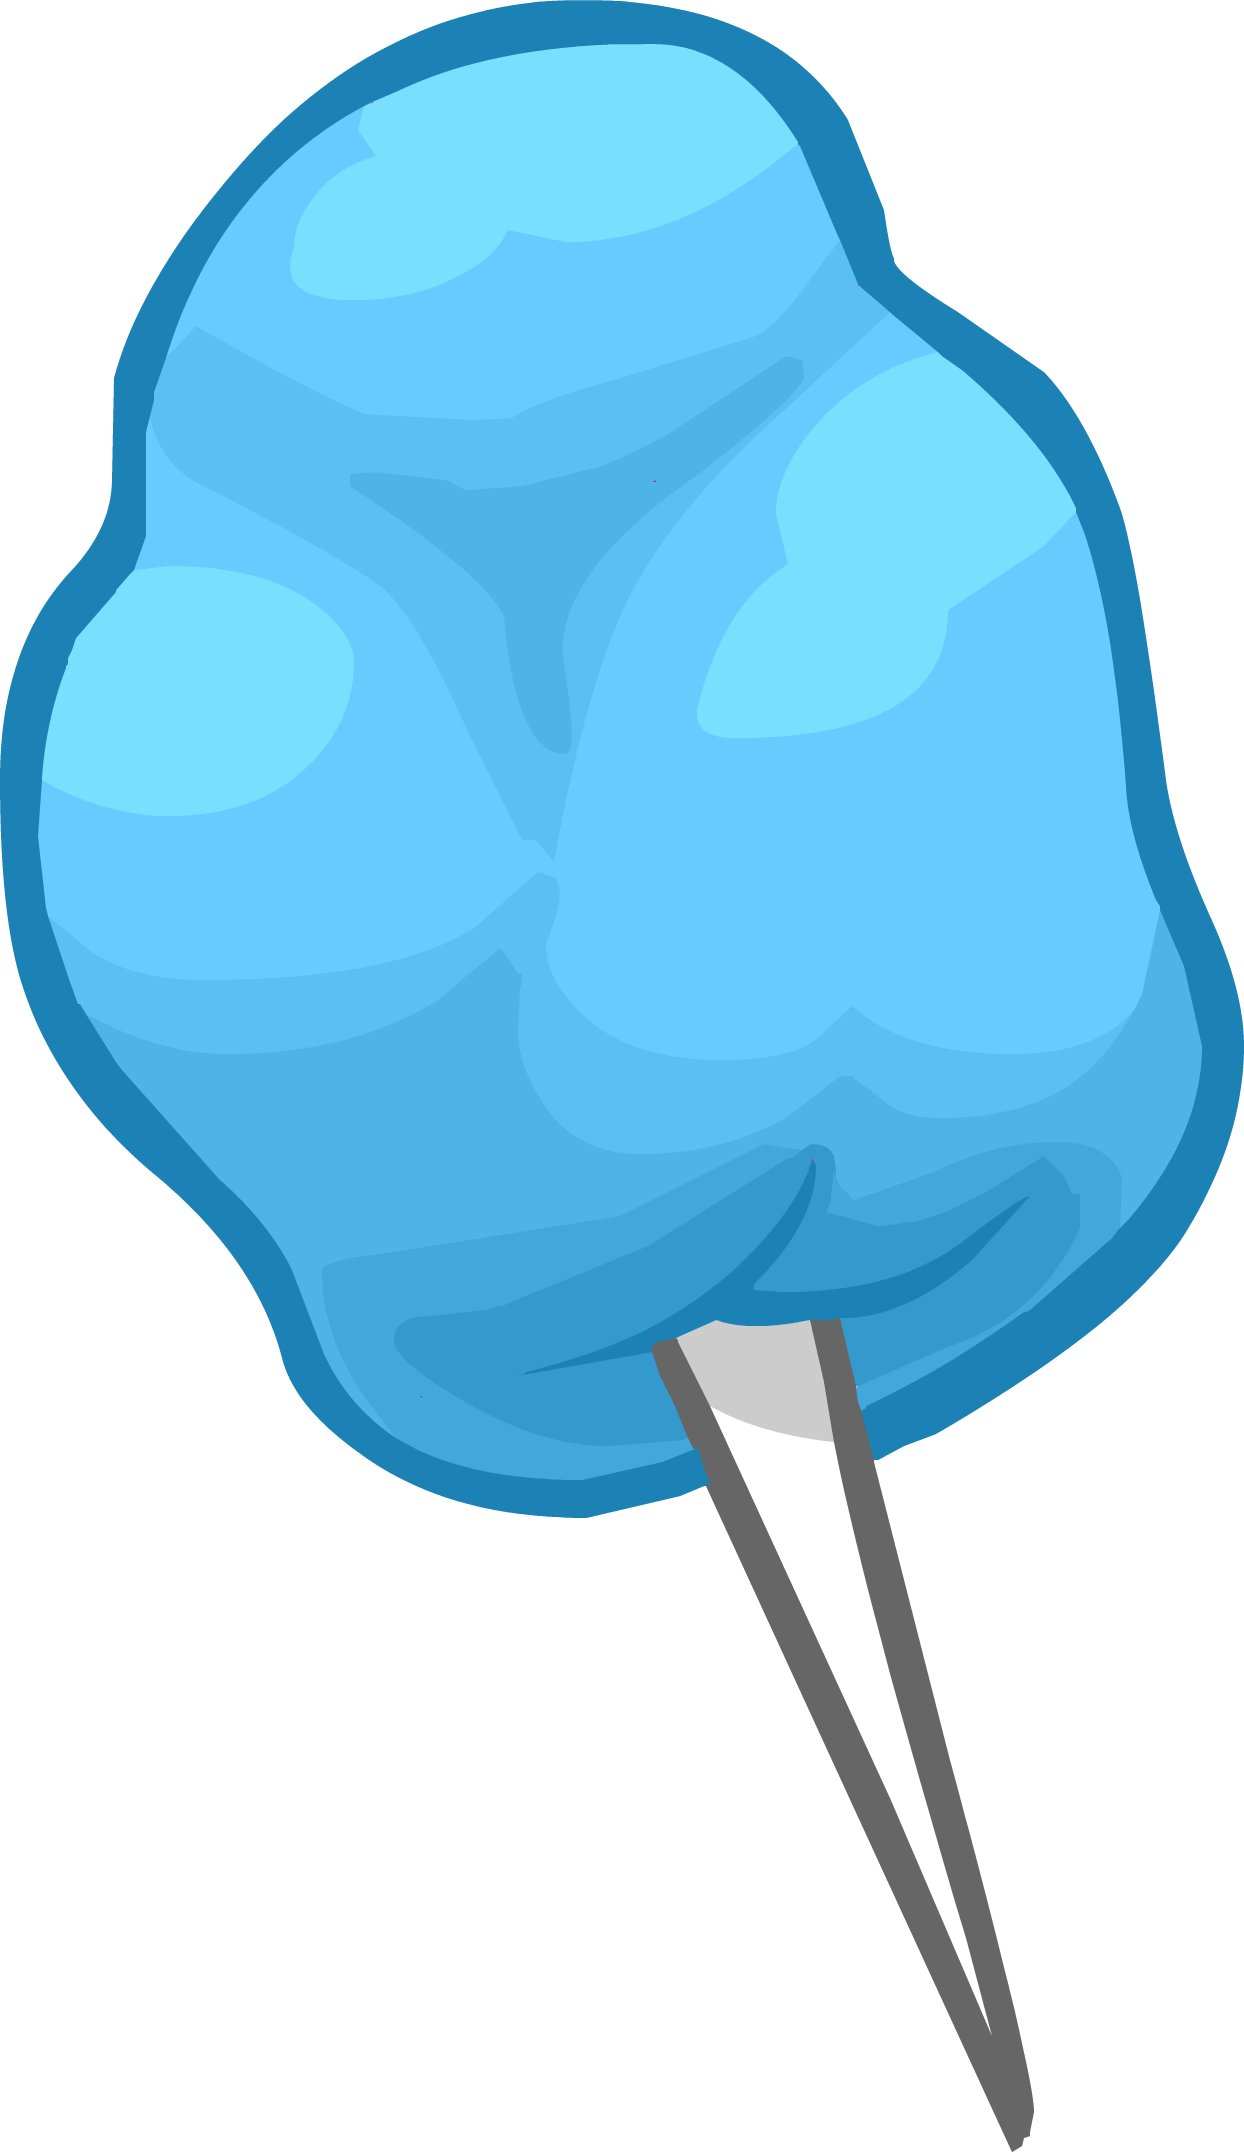 Cotton Candy | Club Penguin Wiki | FANDOM powered by Wikia